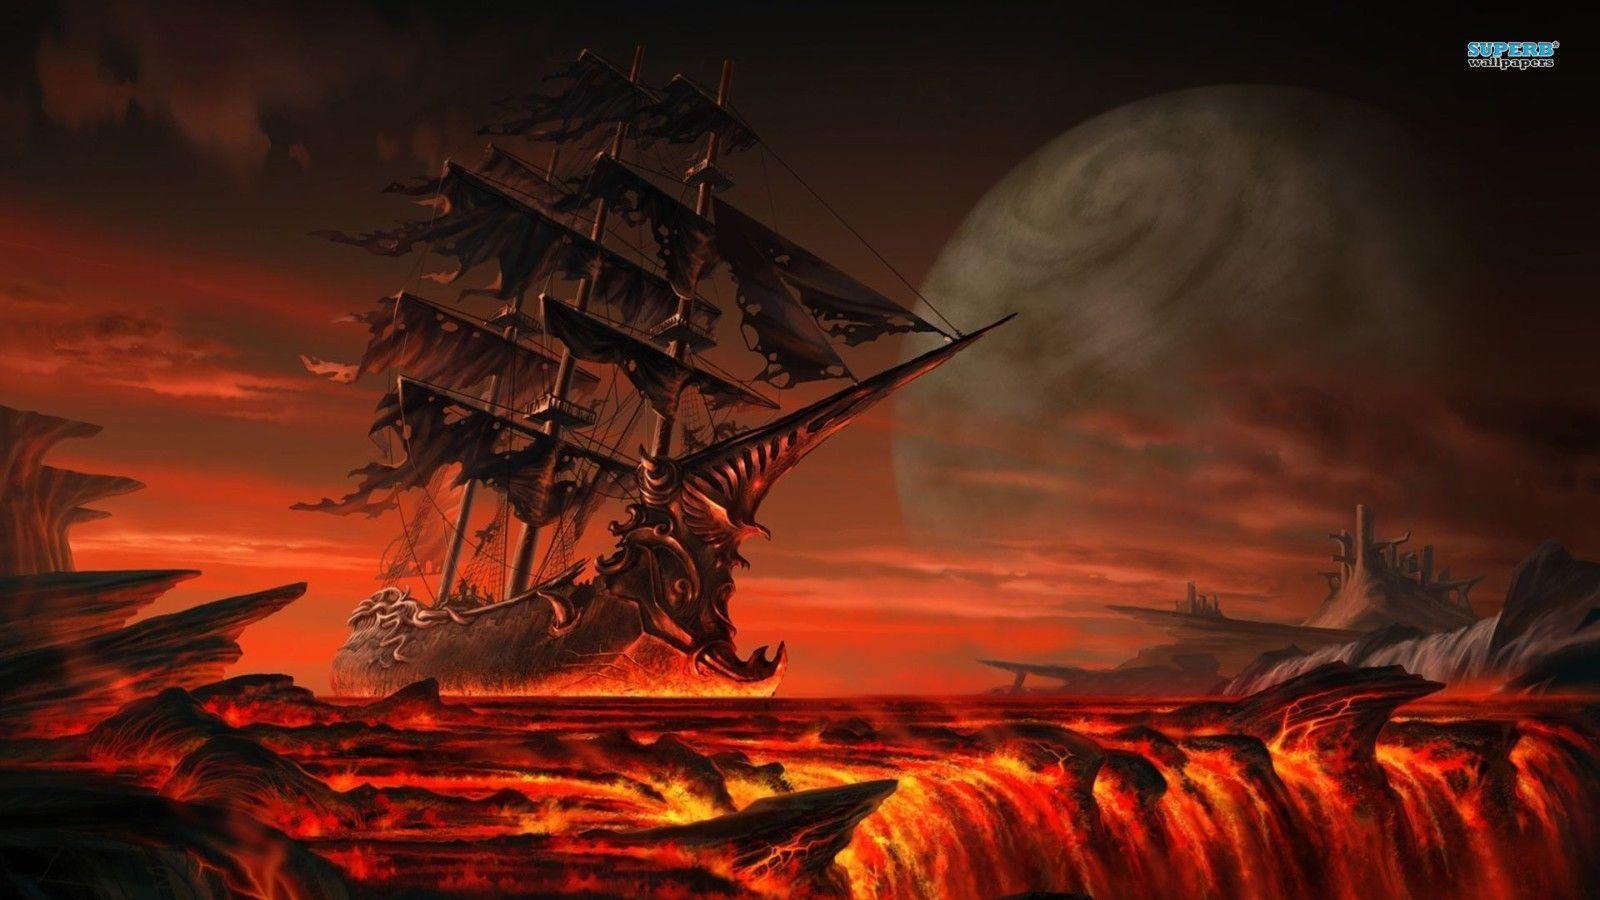 Pirates image Underworld Pirate Ship HD wallpaper and background